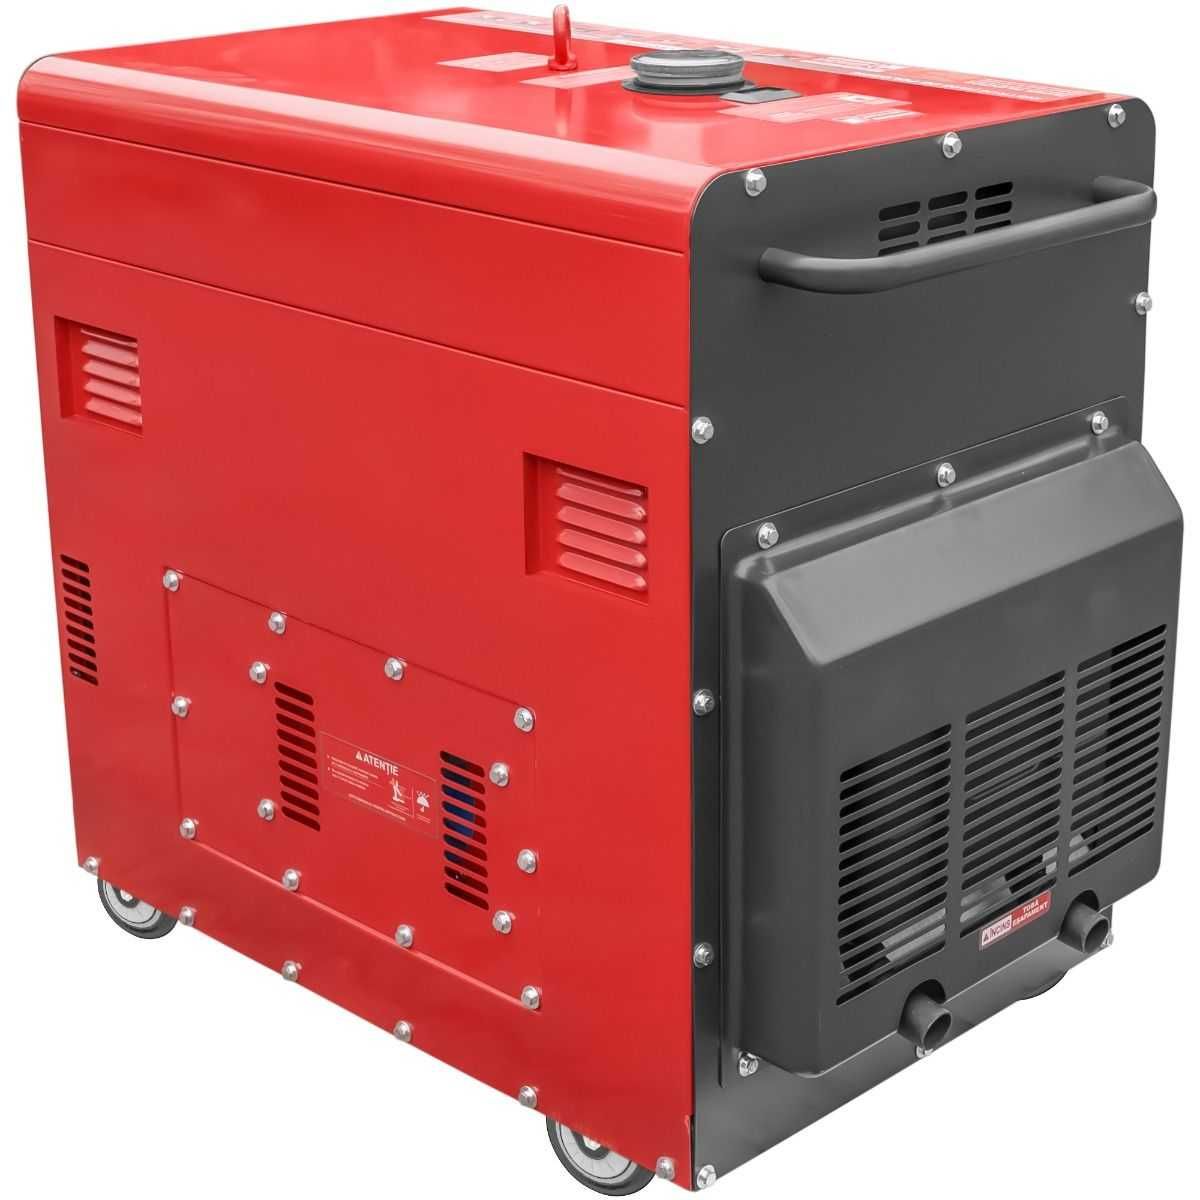 Generator curent insonorizat Rotakt RODE9500Q 6.6kW 230V AVR cu ATS